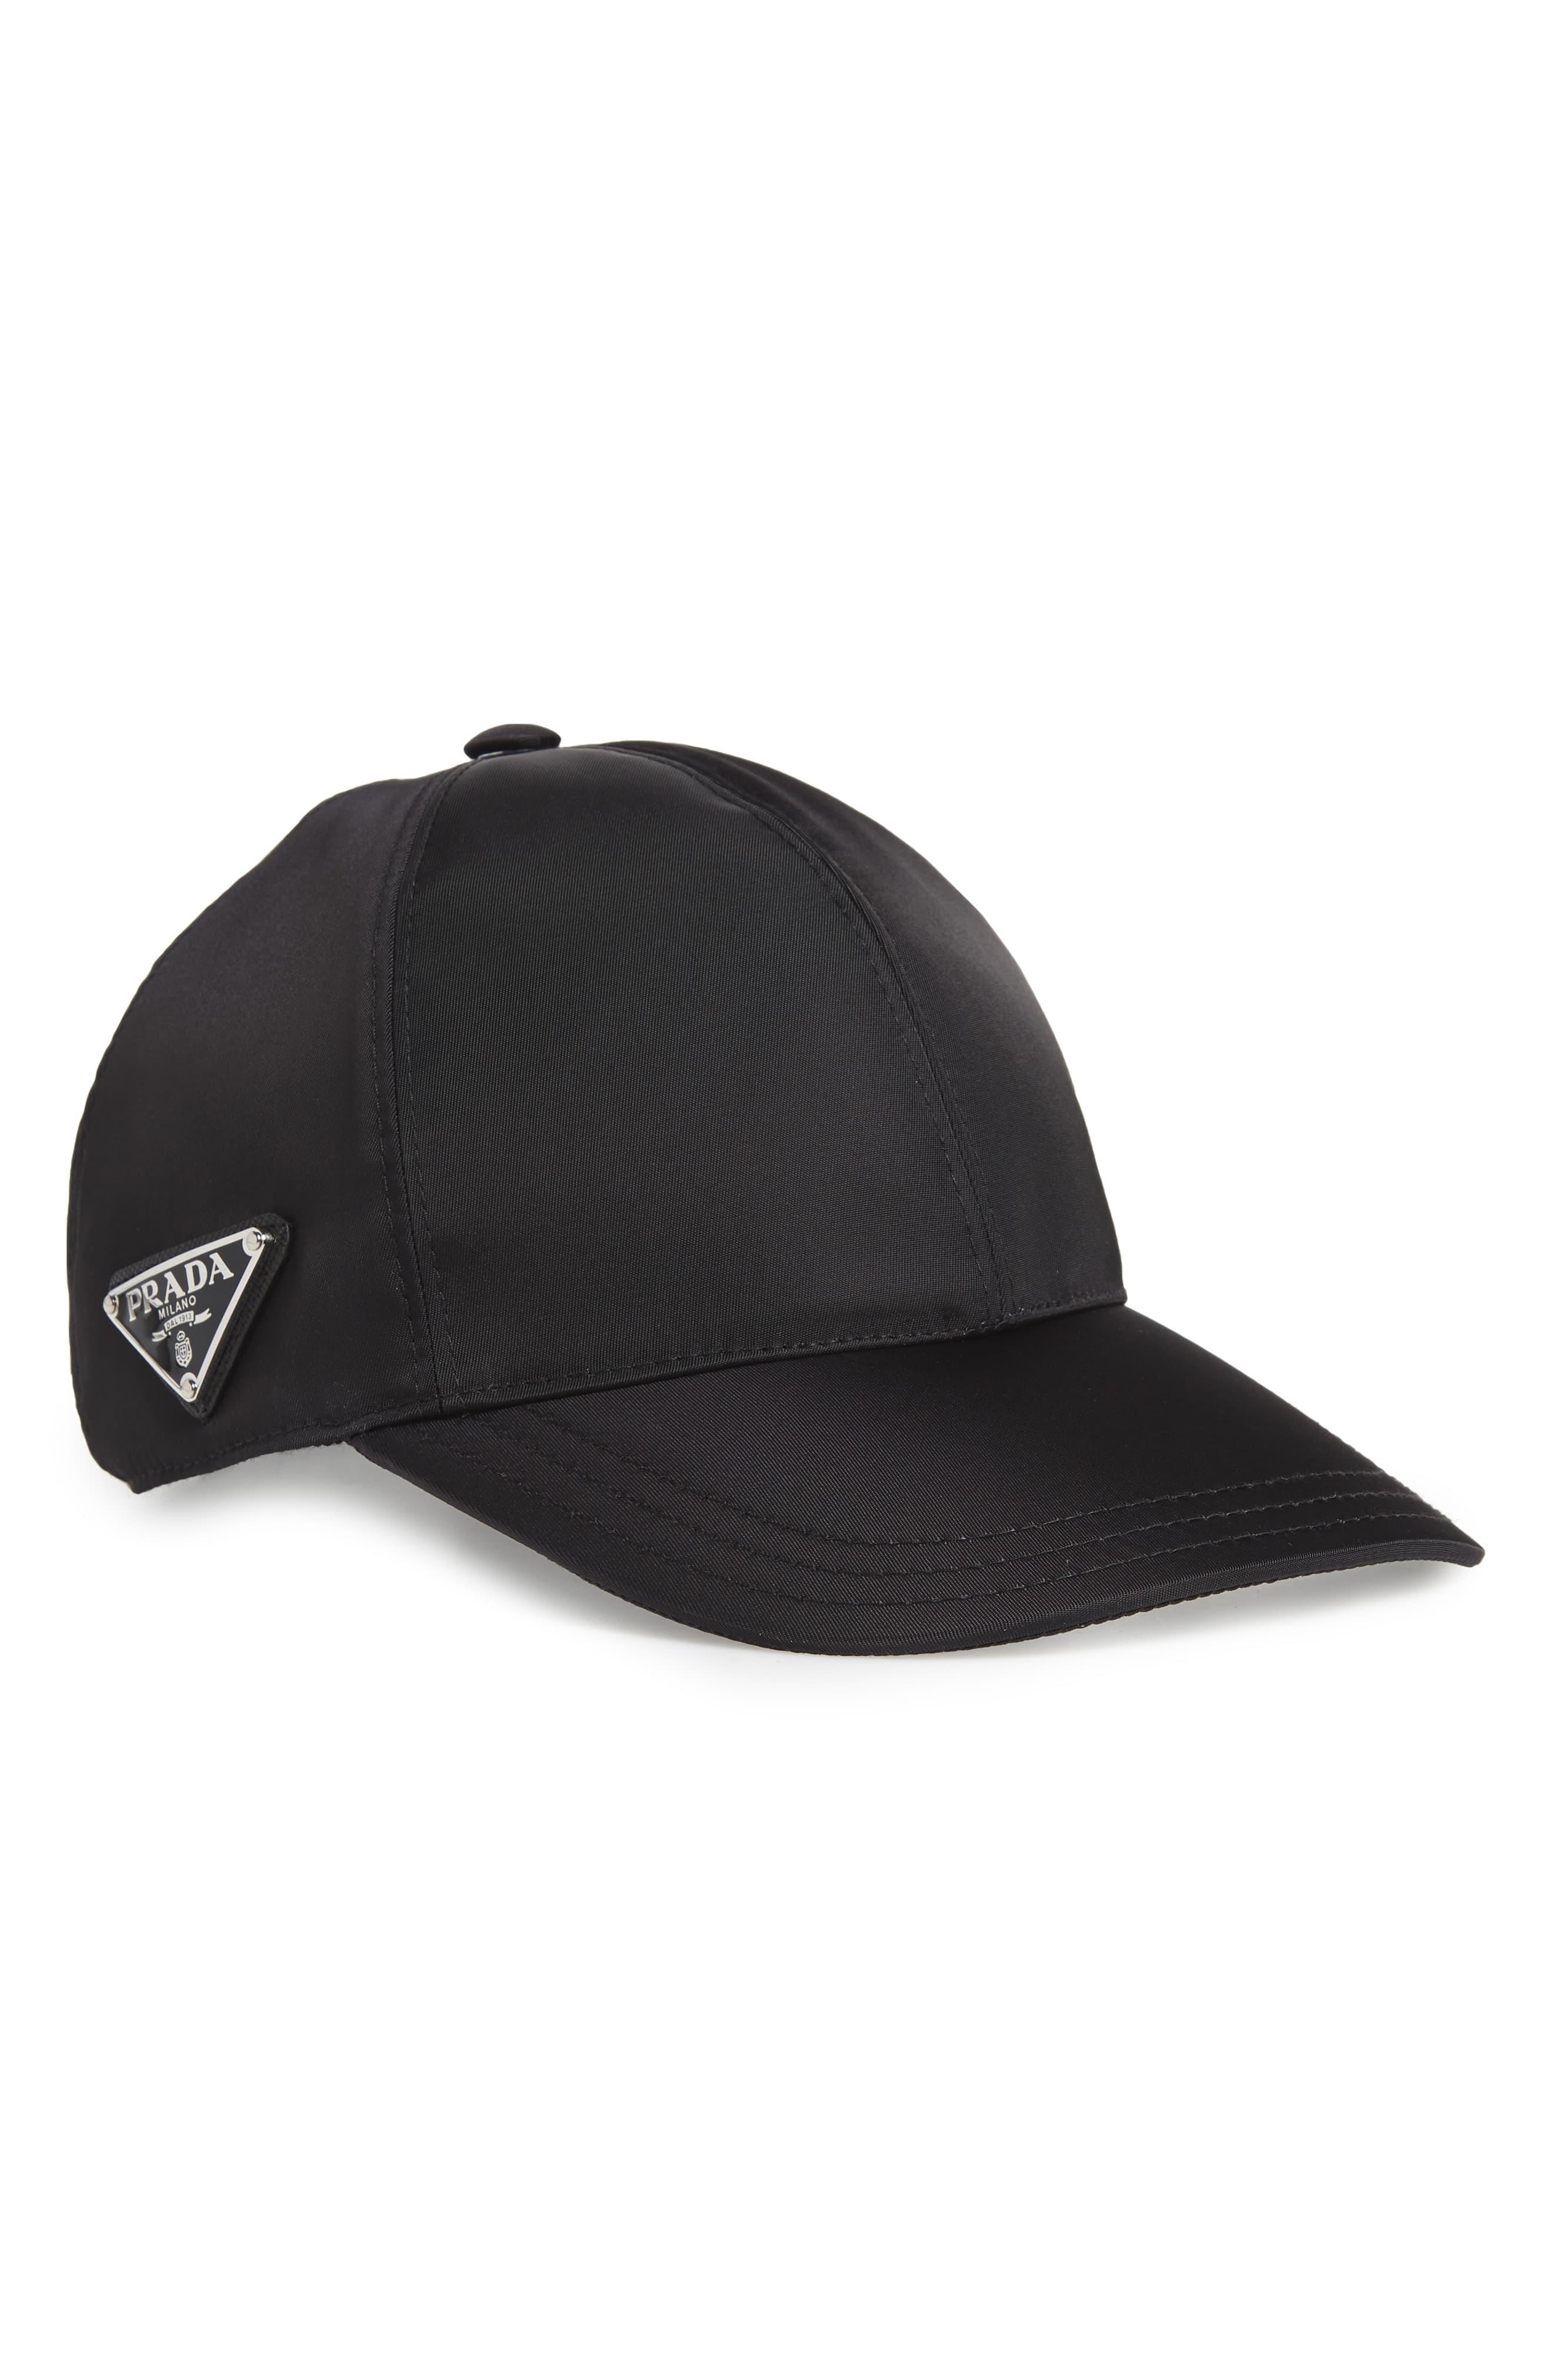 Prada Tessuto Triangolo Nylon Baseball Cap in Black - Lyst